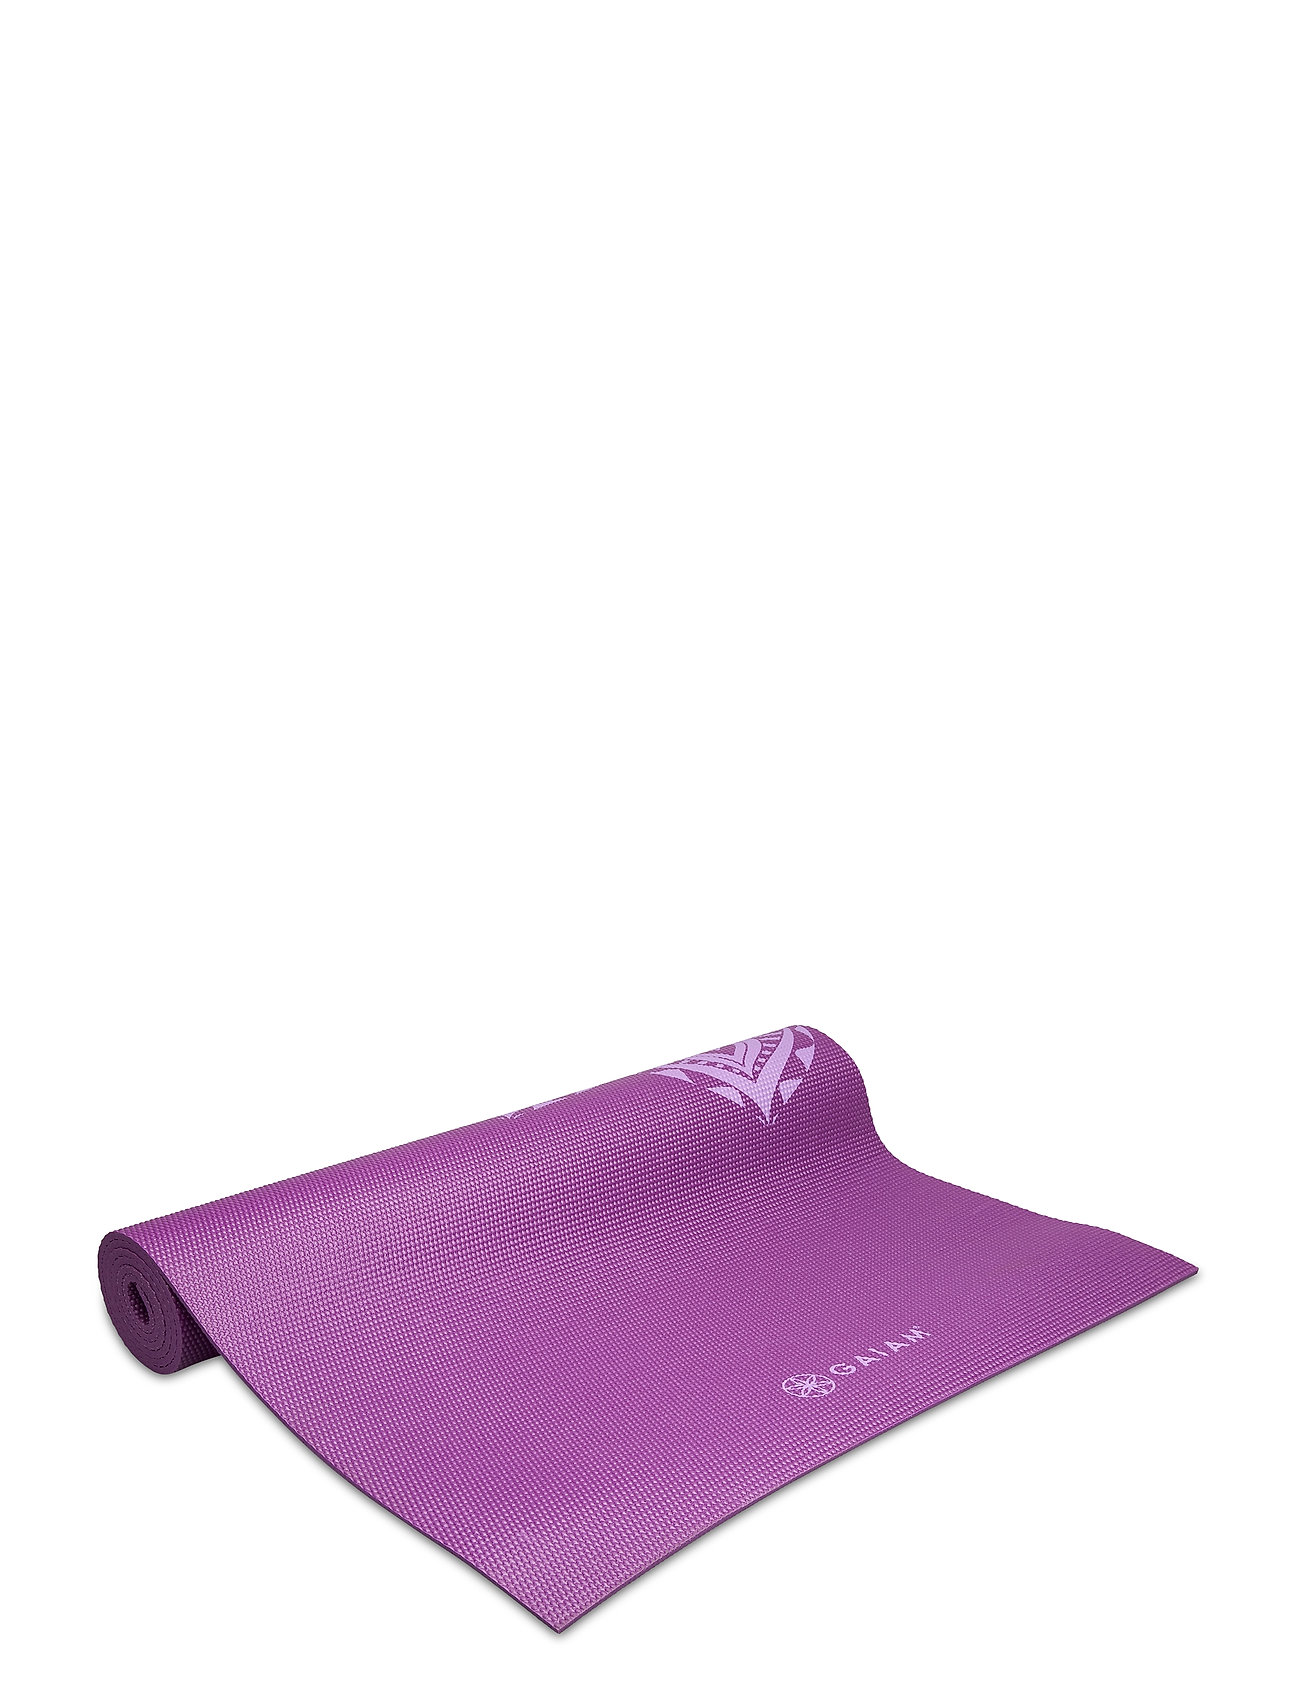 6mm Yoga Mat Pruple Mandala Accessories Sports Equipment Yoga Equipment Yoga Mats And Accessories Liila Gaiam